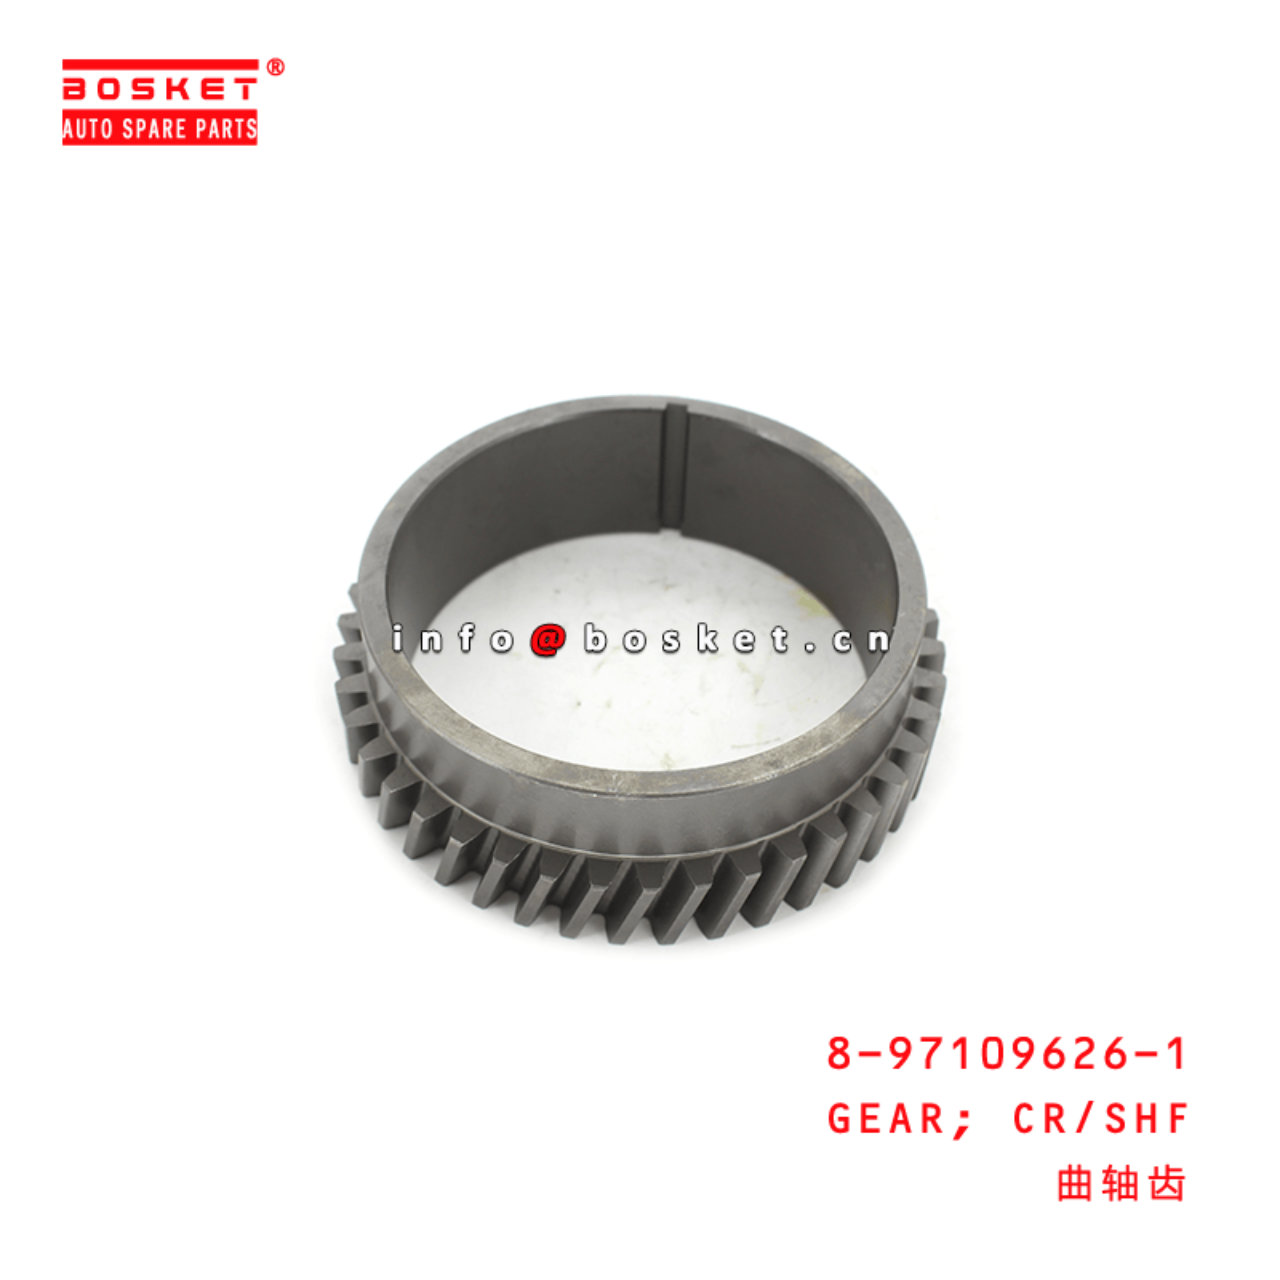 8-97109626-1 Crankshaft Gear Suitable for ISUZU NQR71 4HG1 